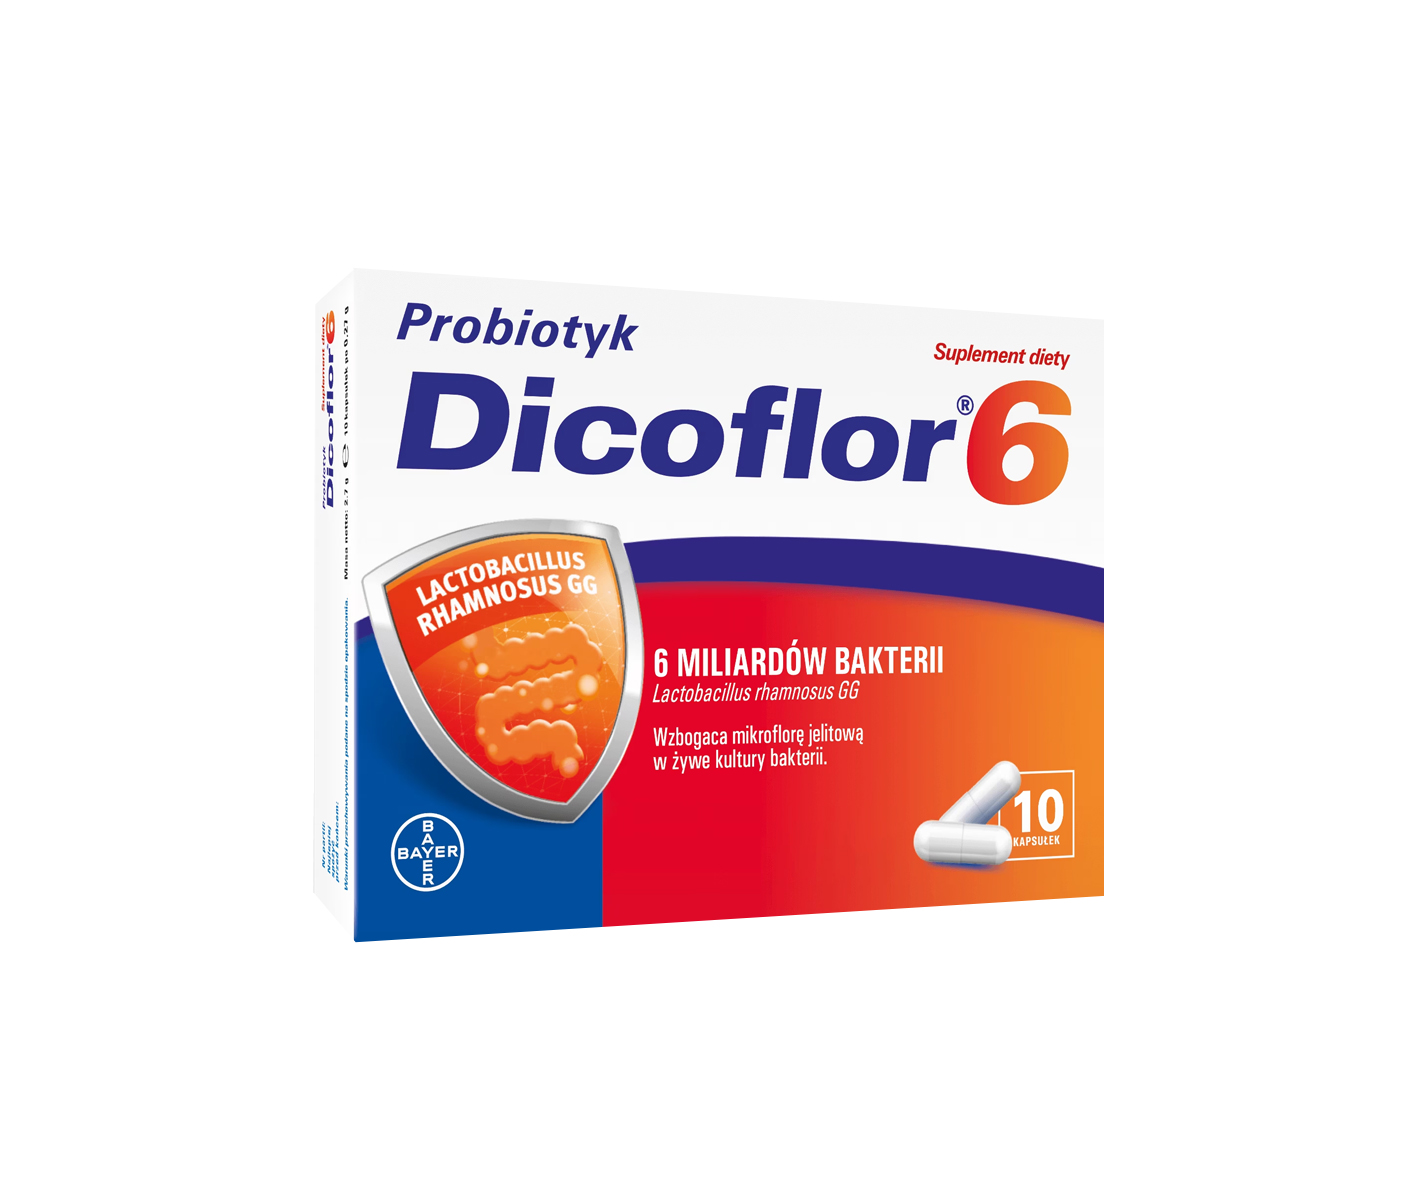 Dicoflor 6, probiotyk